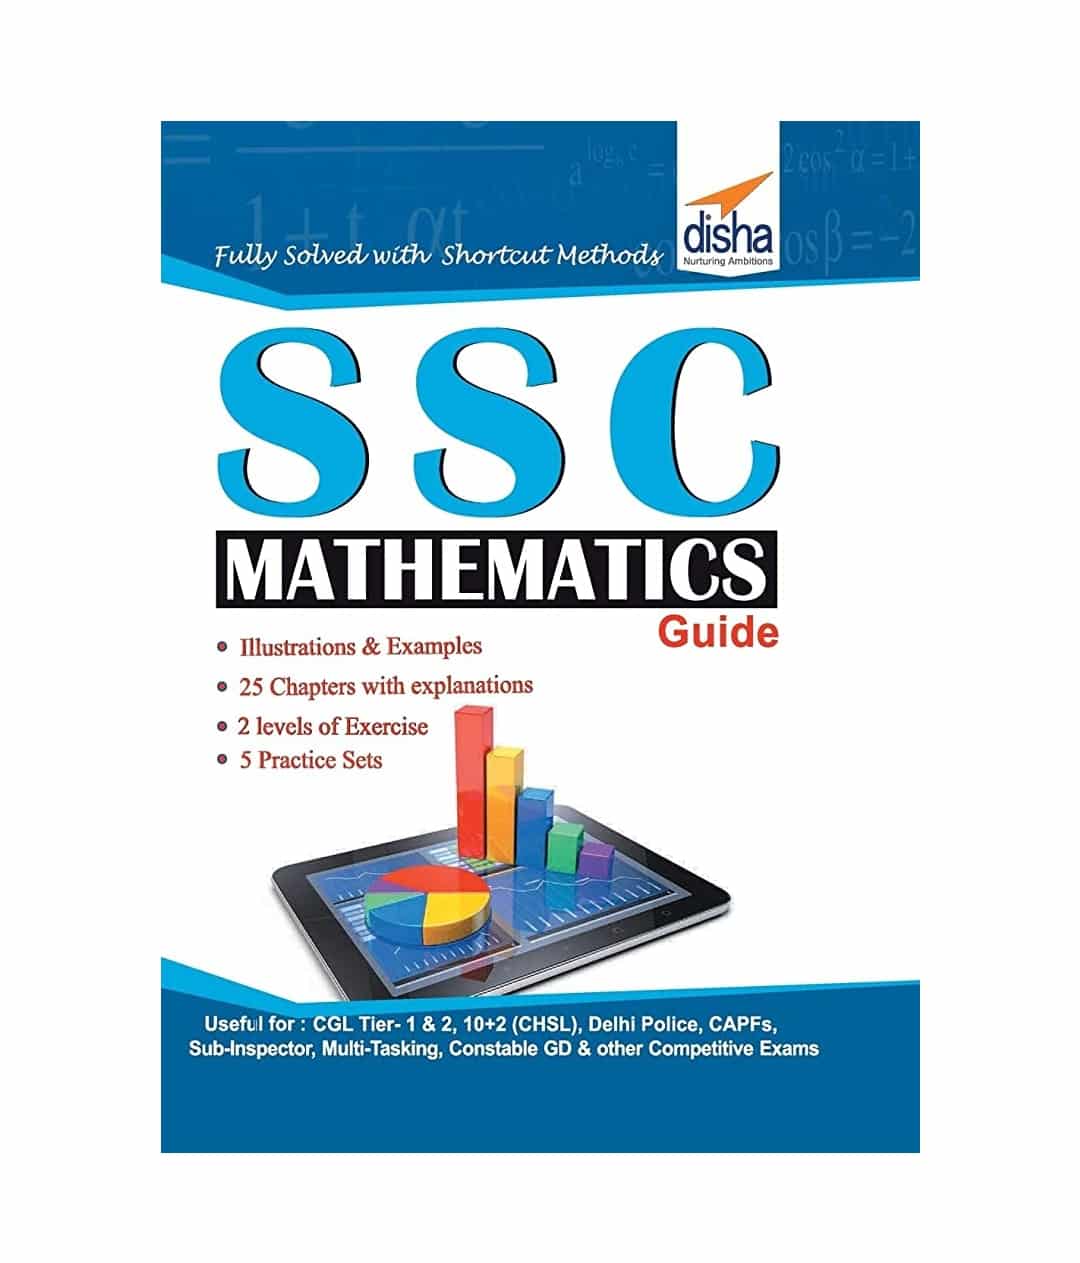 SSC Mathematics Guide – Disha Publication